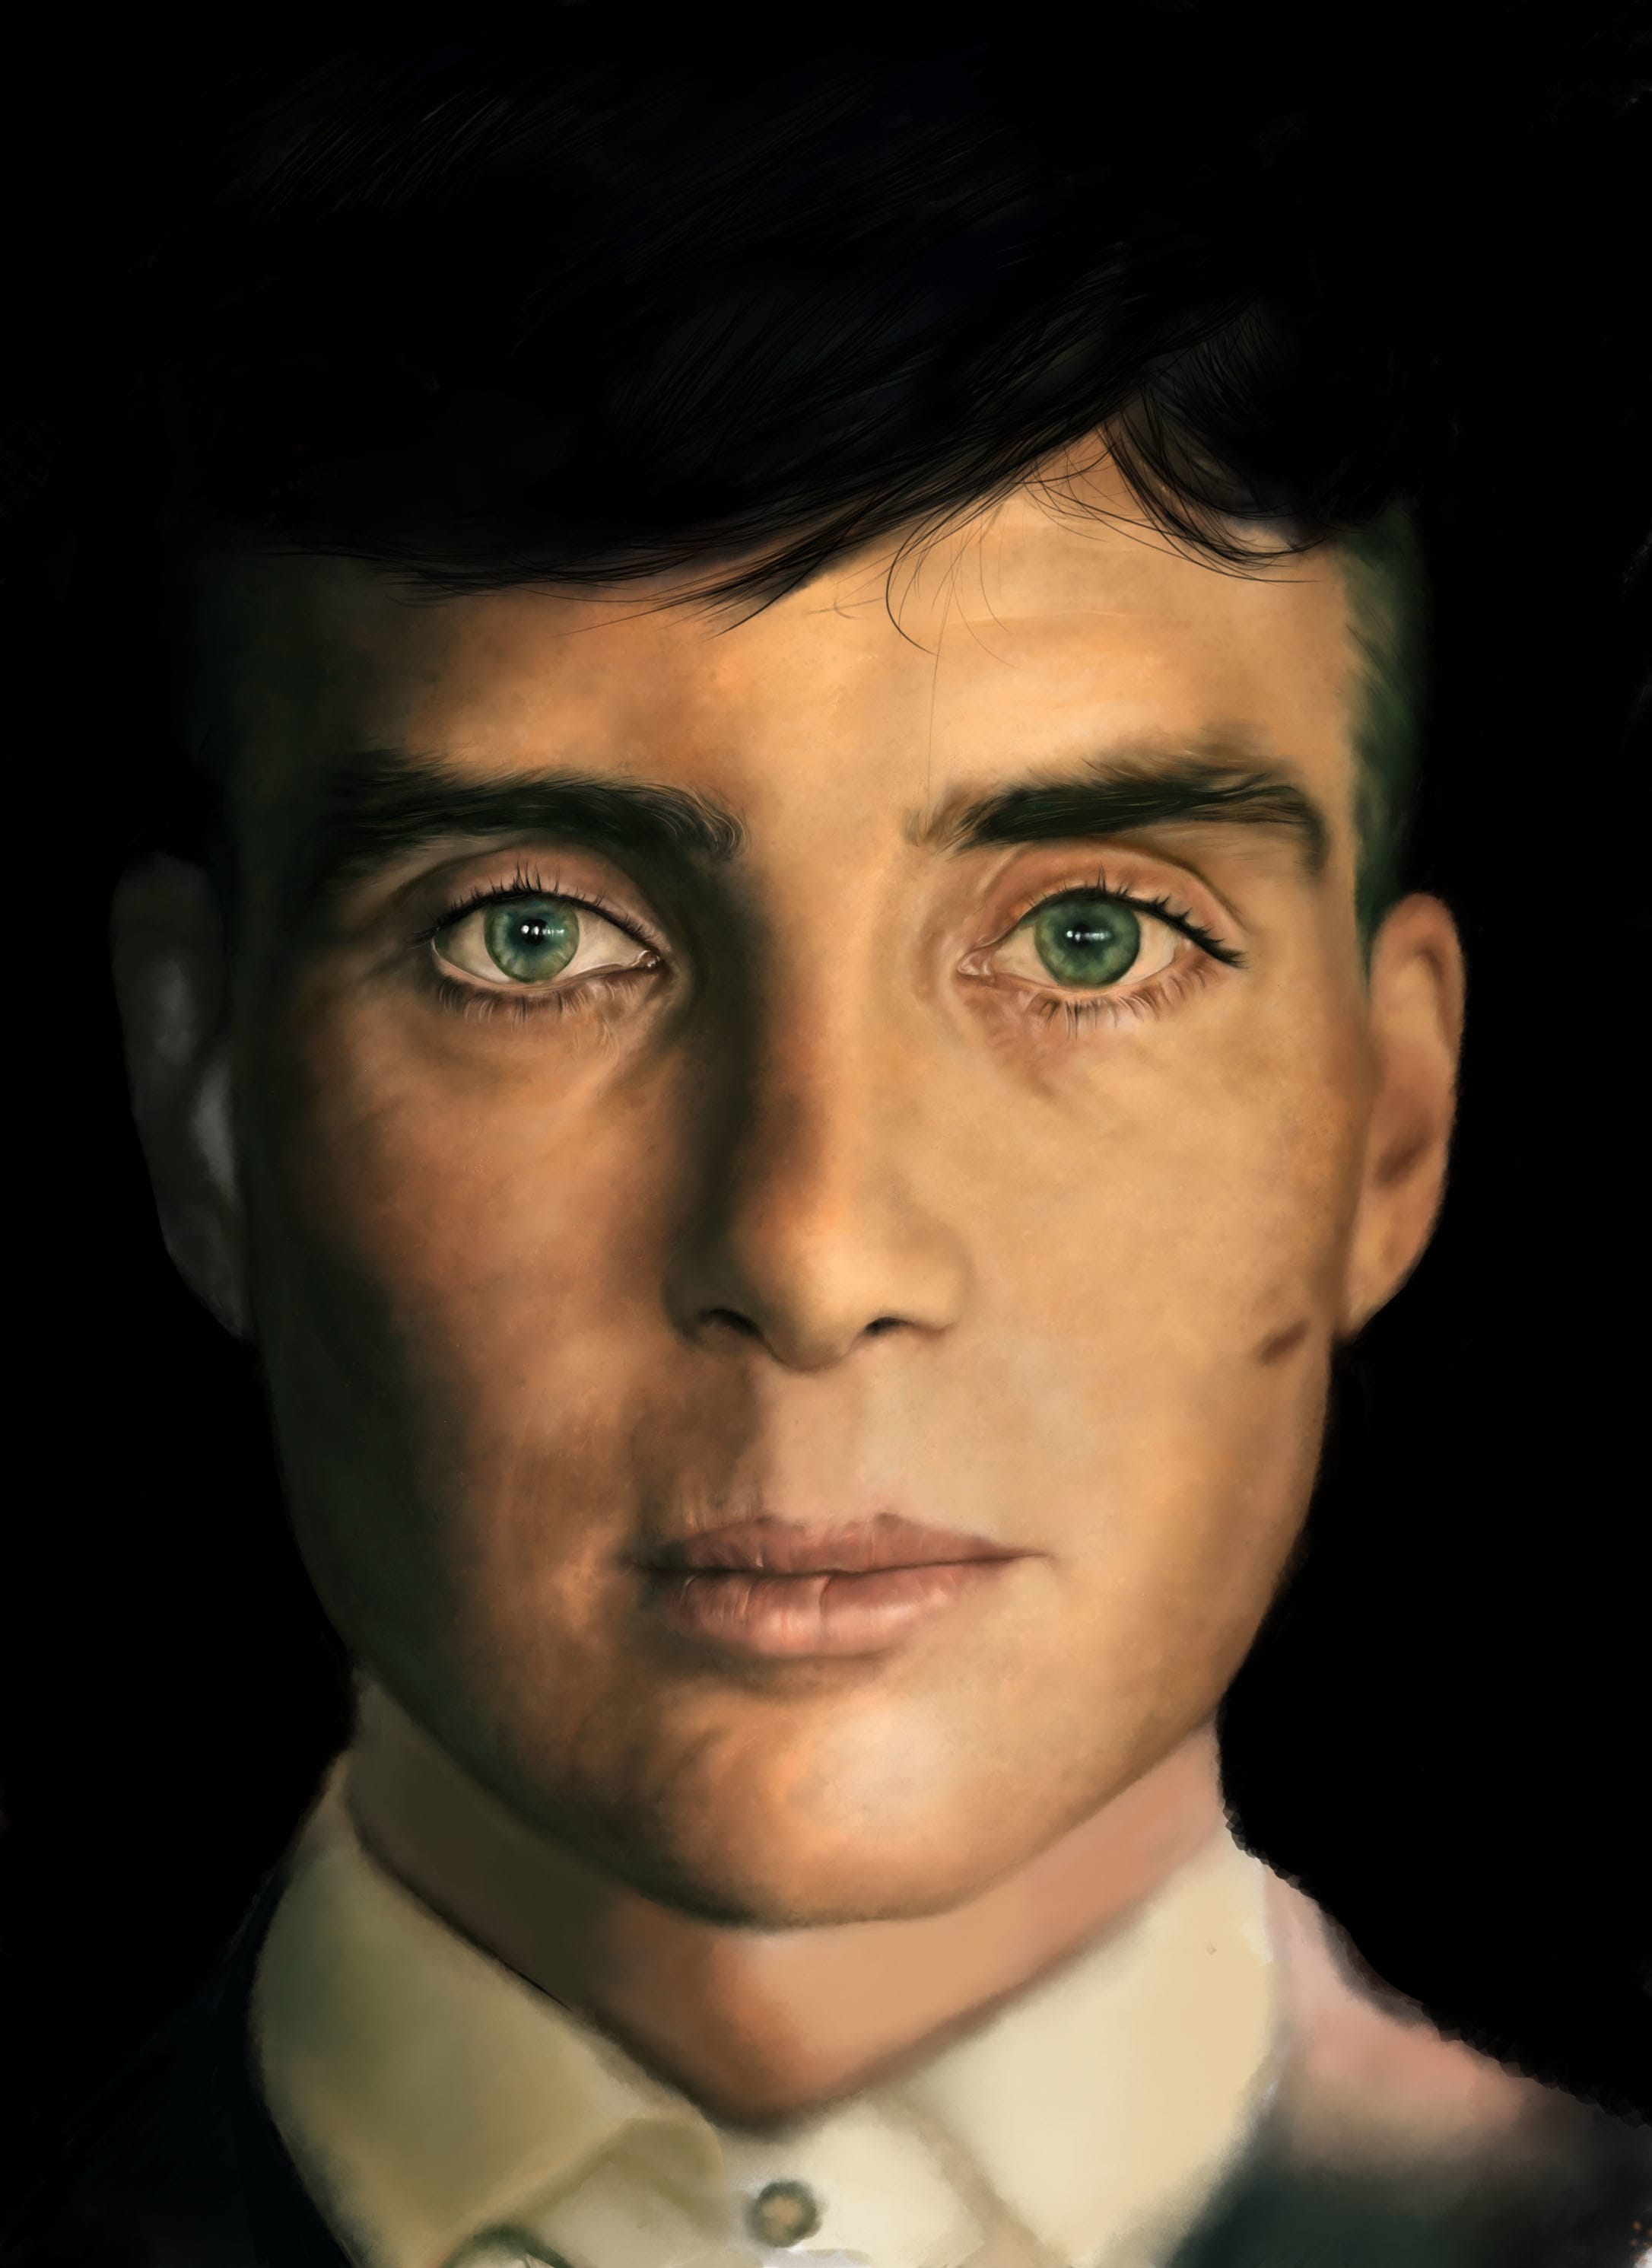 Draw Or Paint Custom Digital Hyperrealistic Portrait By Katiediago Fiverr